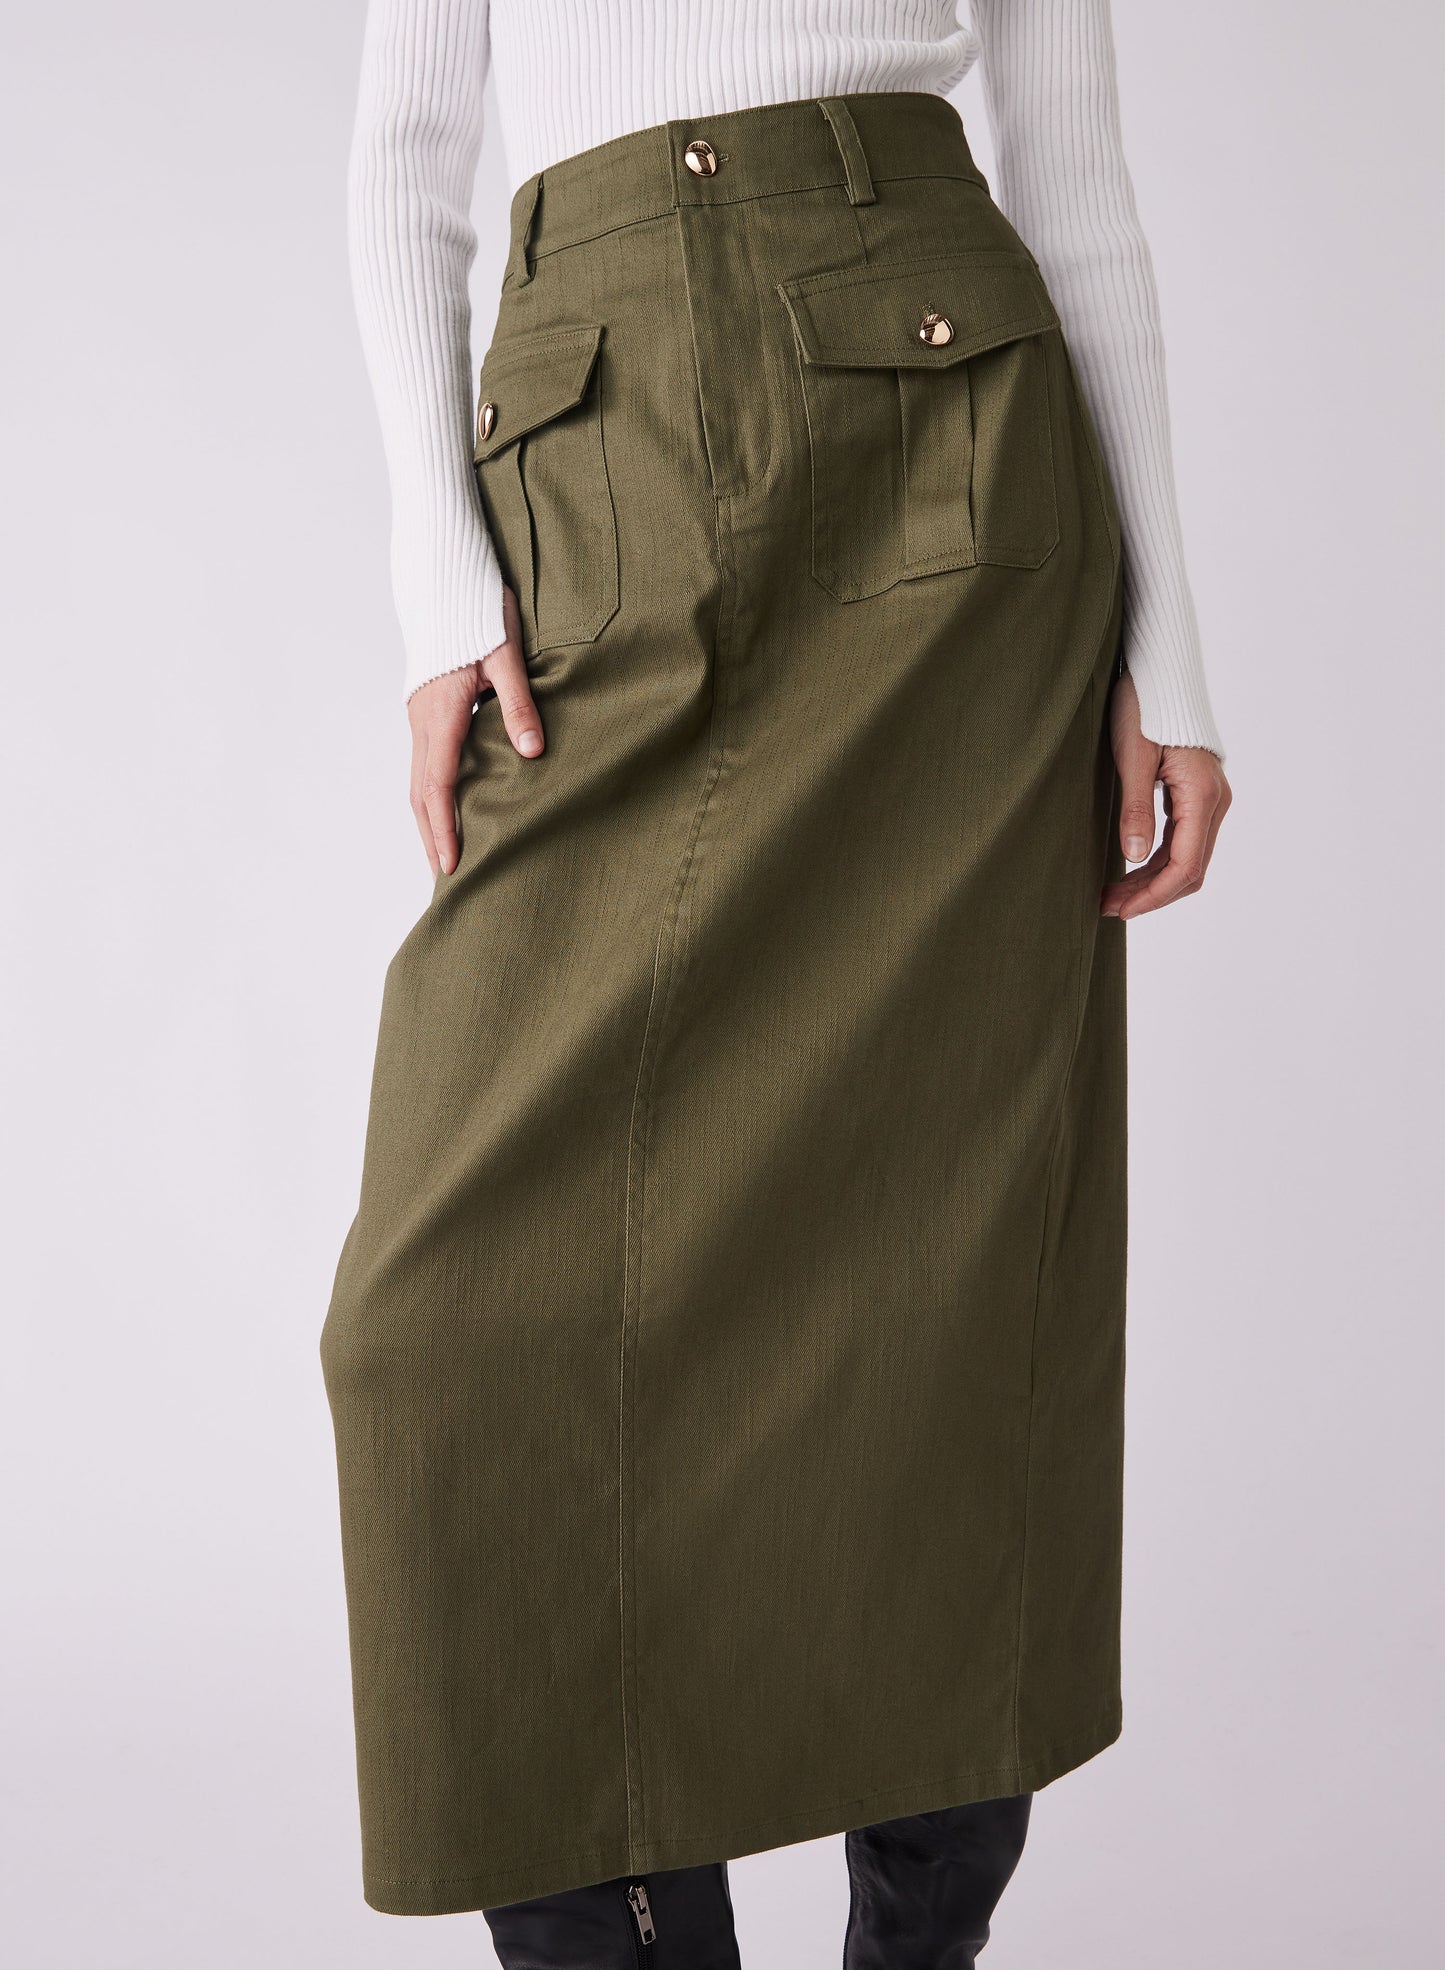 
                  
                    ESMAEÉ - Uptown Skirt
                  
                